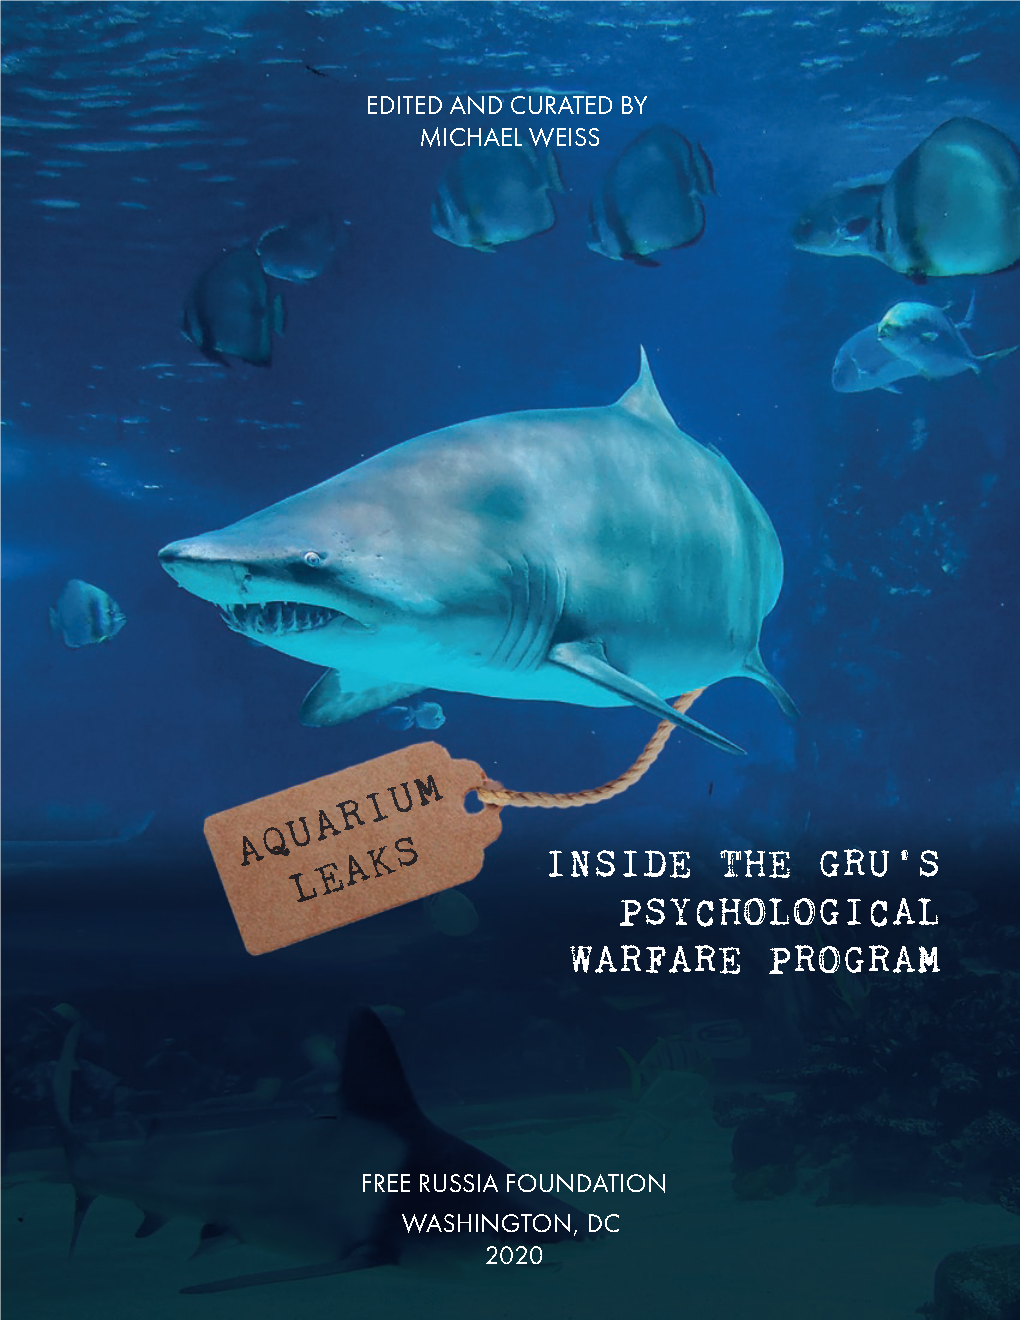 aquarium-leaks-inside-the-gru-s-psychological-warfare-program-docslib